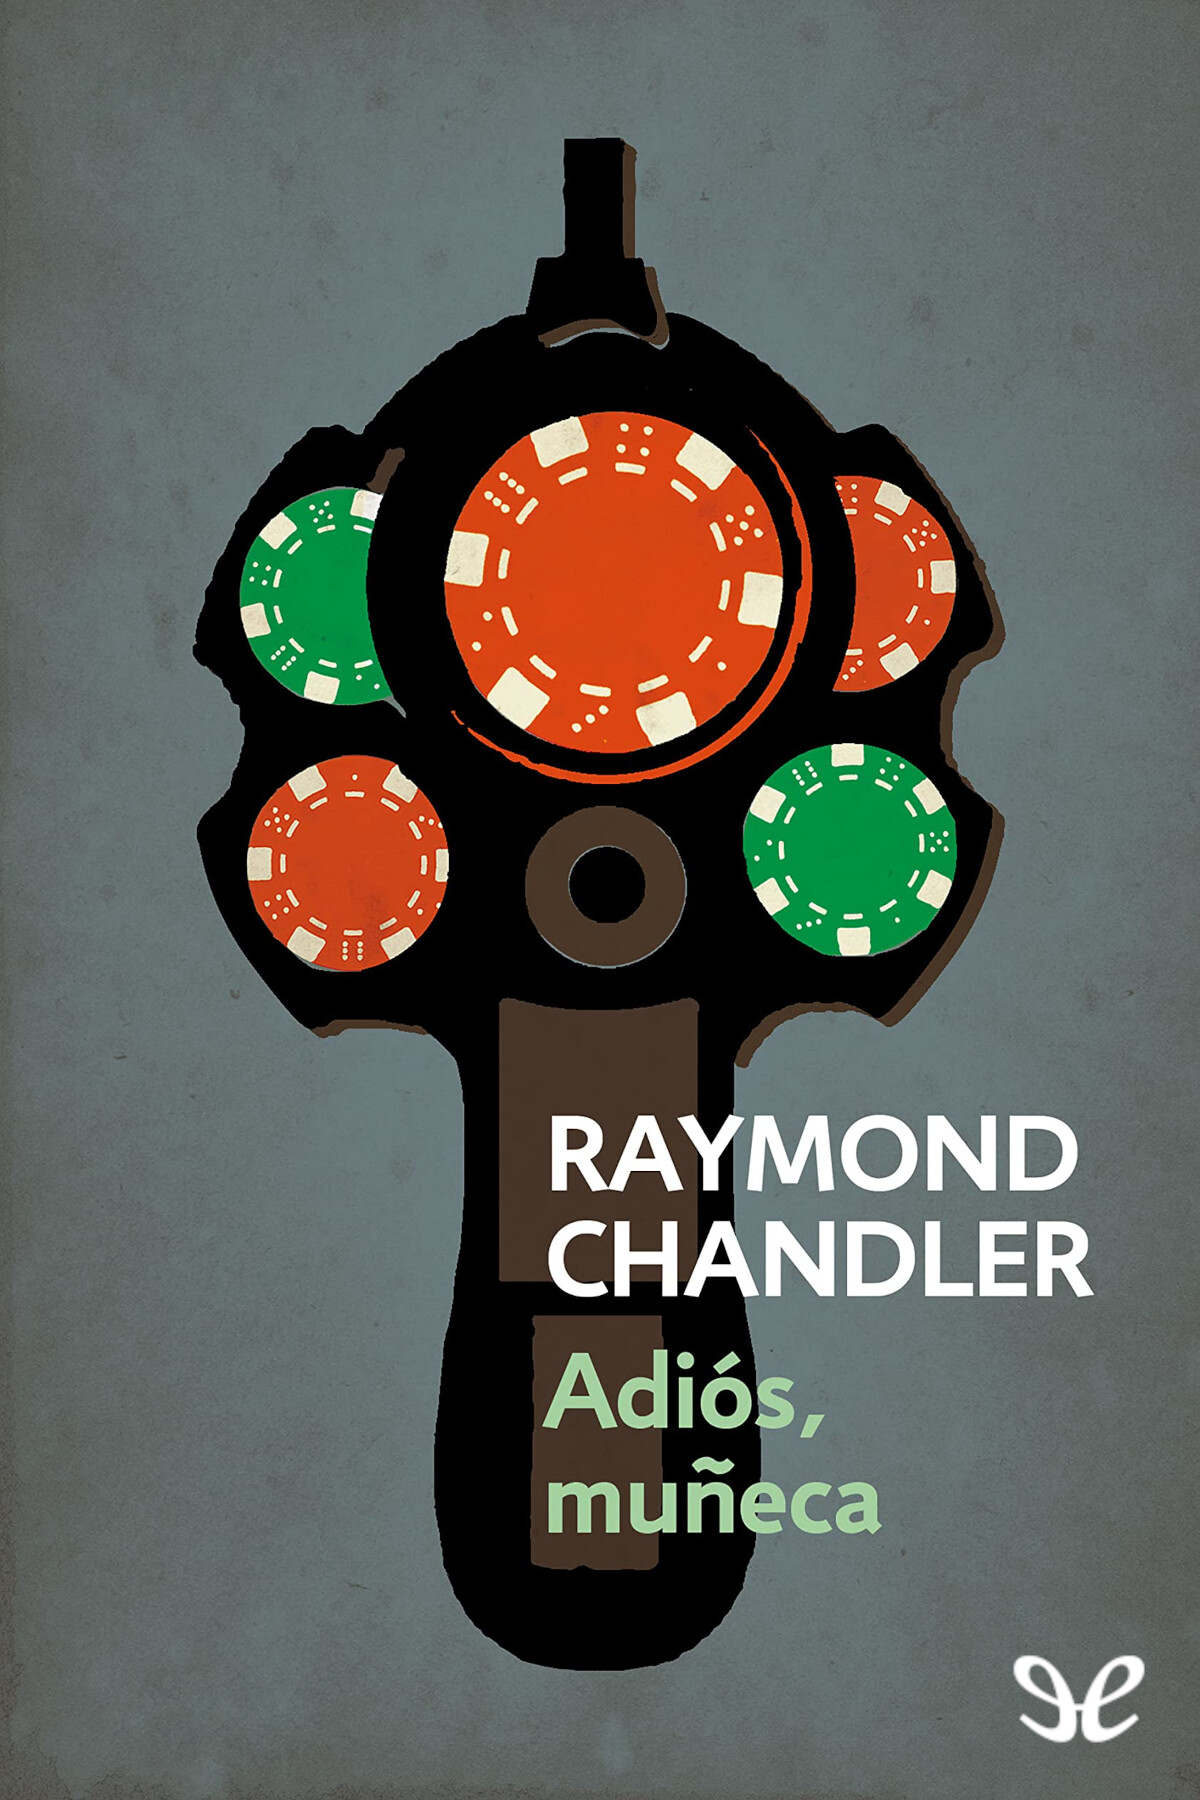 Raymond Chandler: Adiós, muñeca. (Spanish language, 2001)